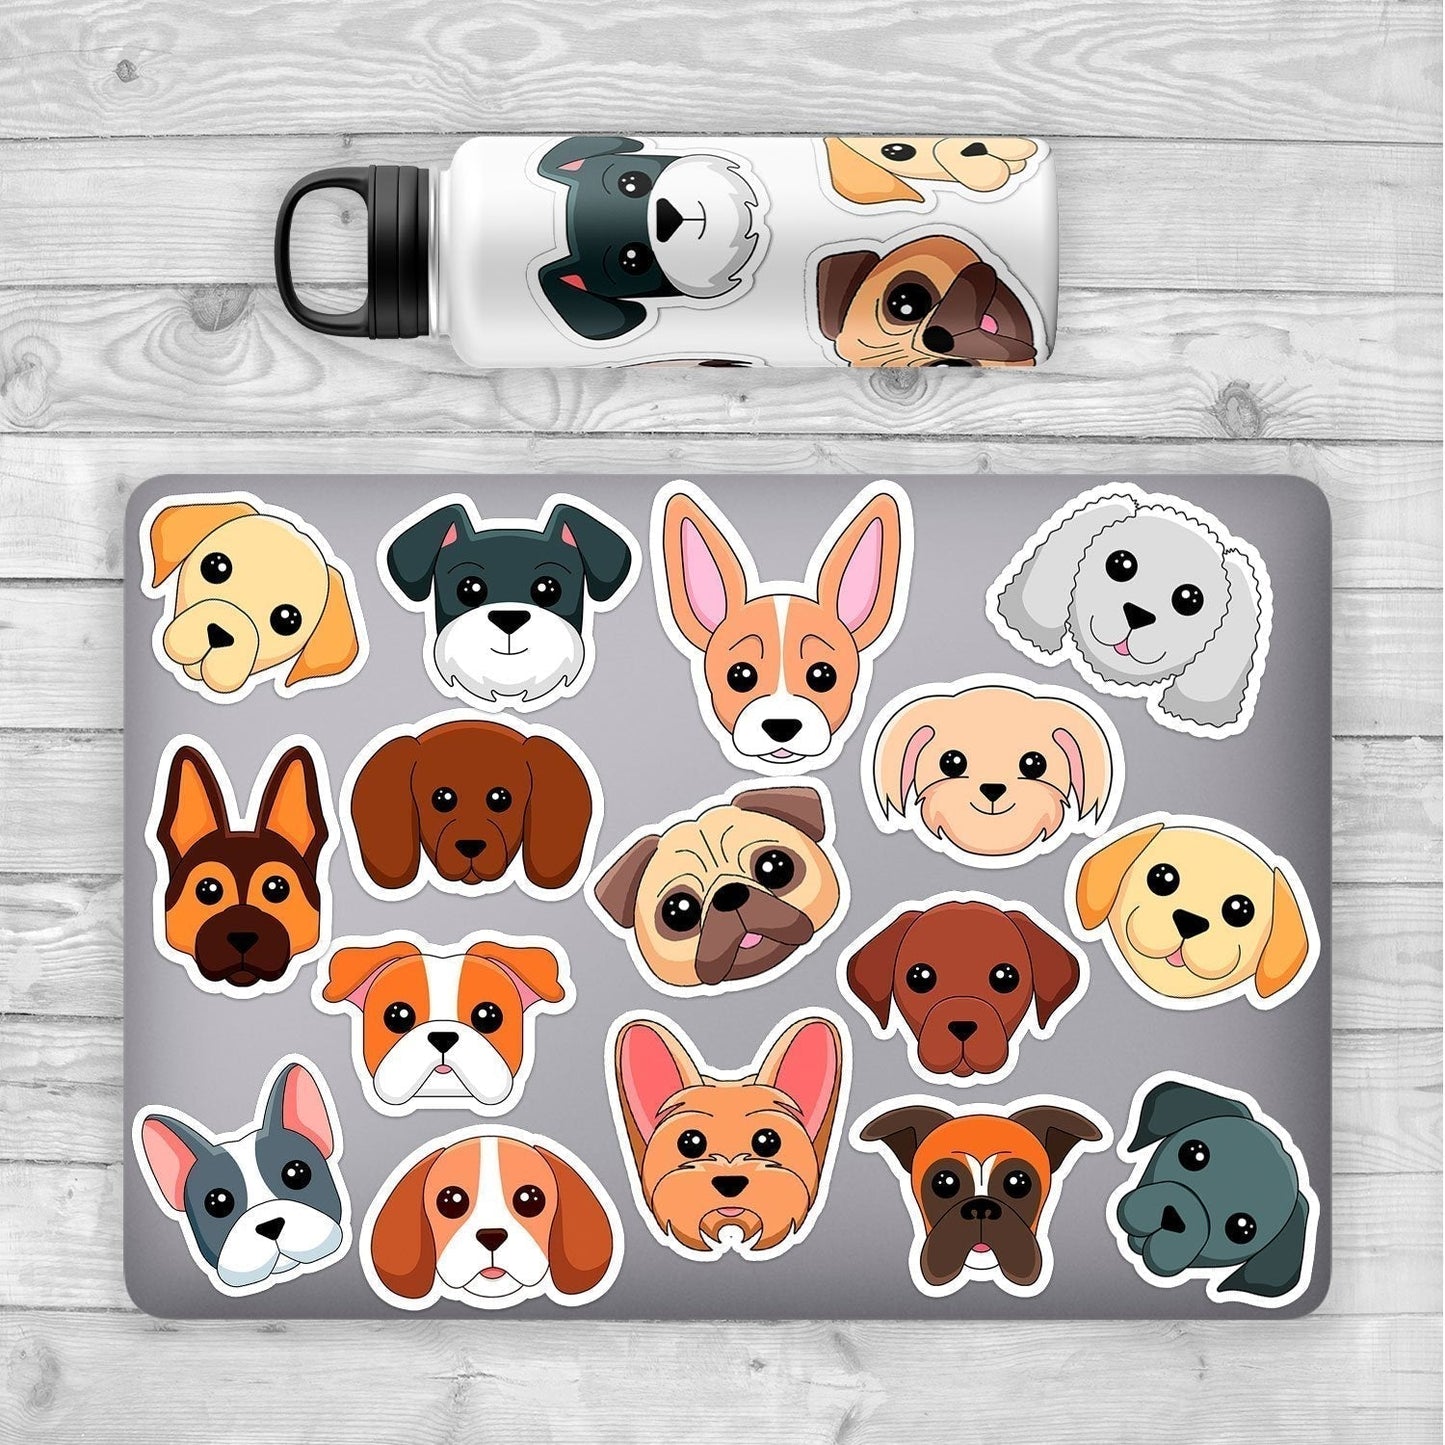 Cavapoo Dog Sticker - Dogstickers.co